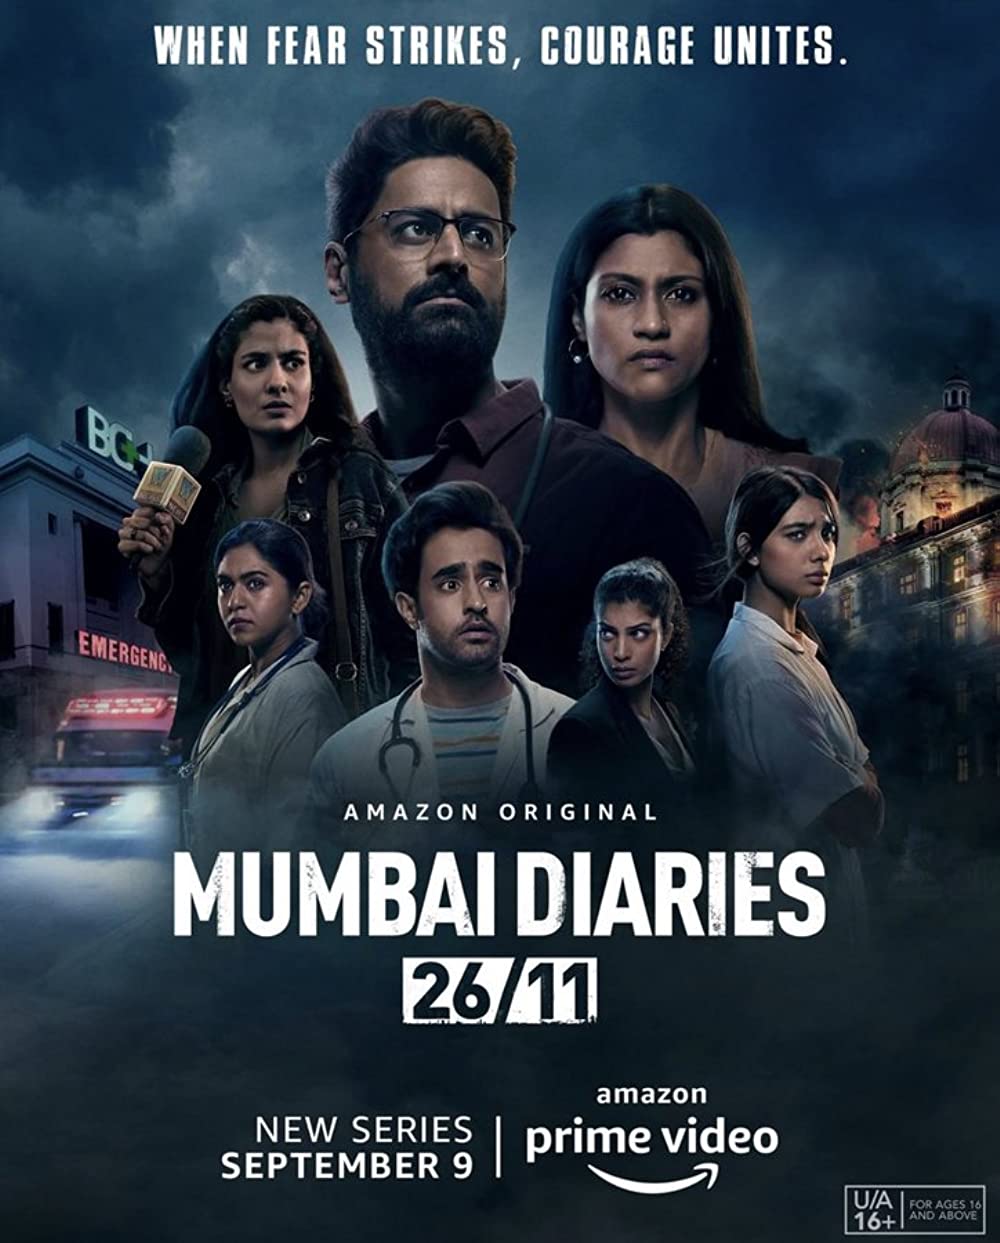 Filmbeschreibung zu Mumbai Diaries 26/11